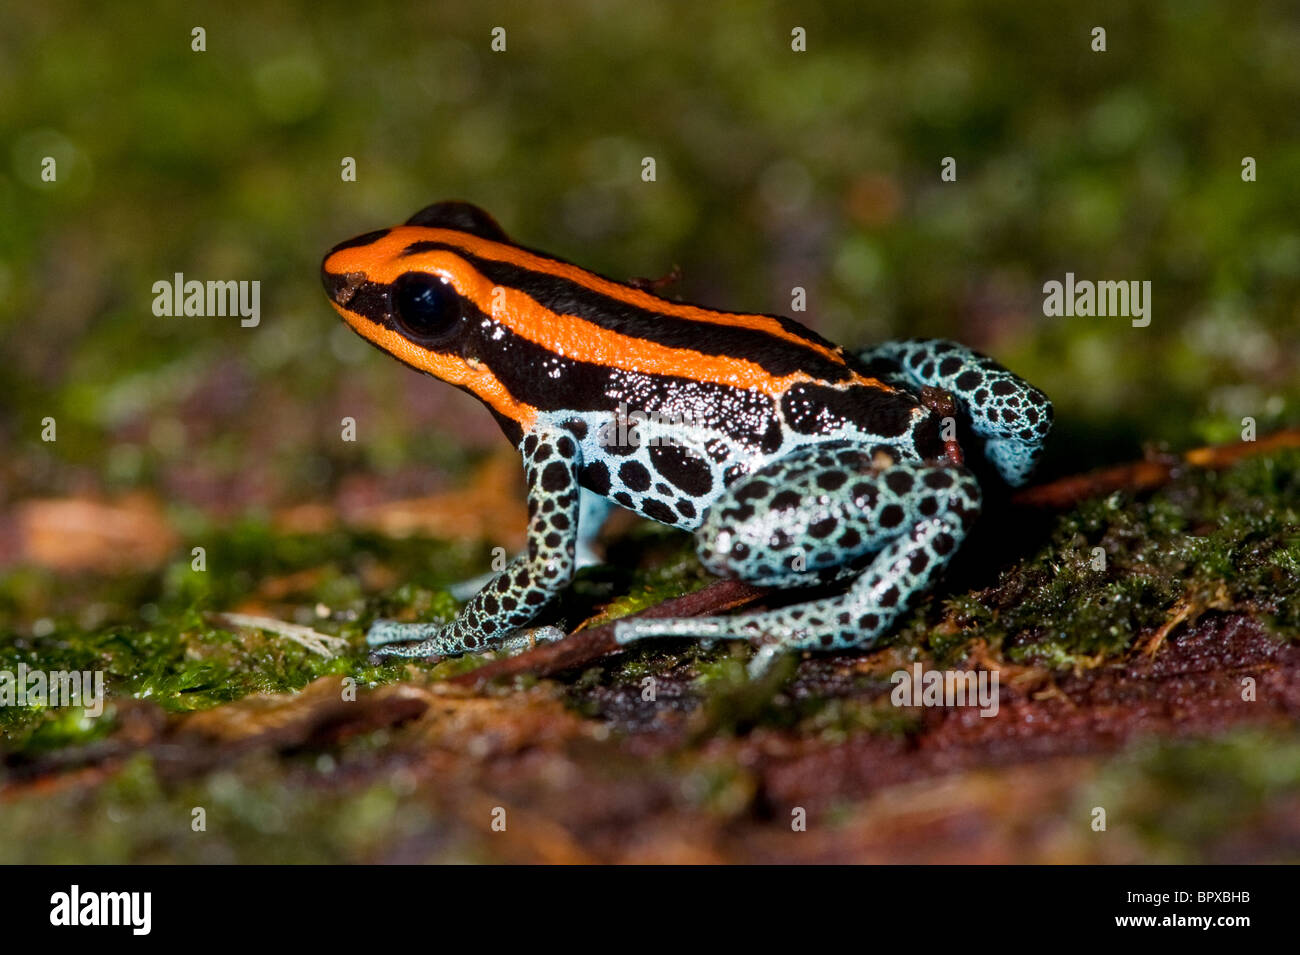 A poison dart frog in the Amazon, Peru species Dendrobates reticulatus. Stock Photo